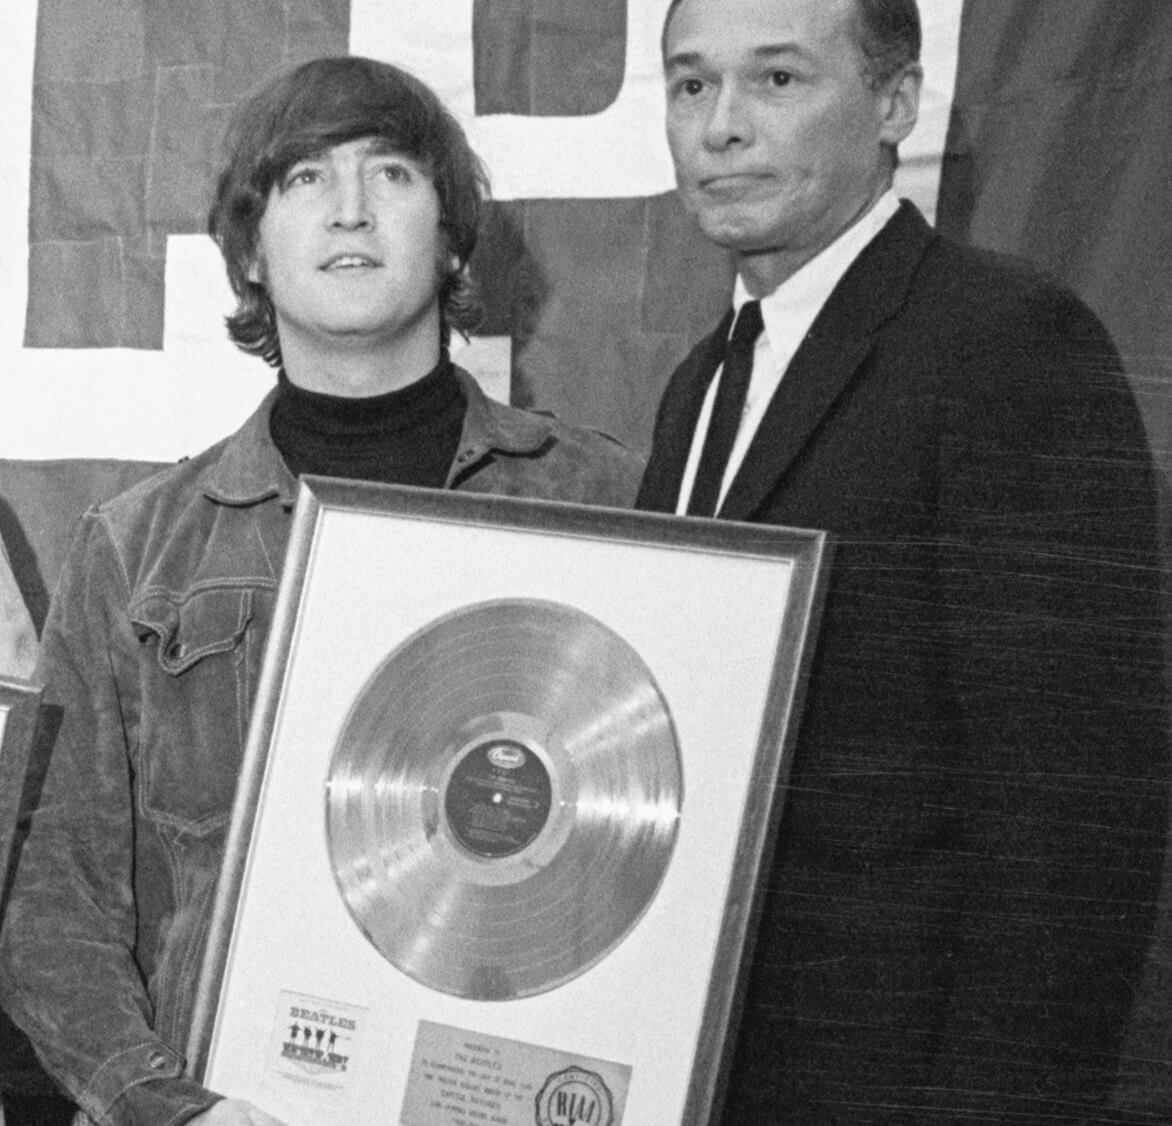 John Lennon standing next to a man